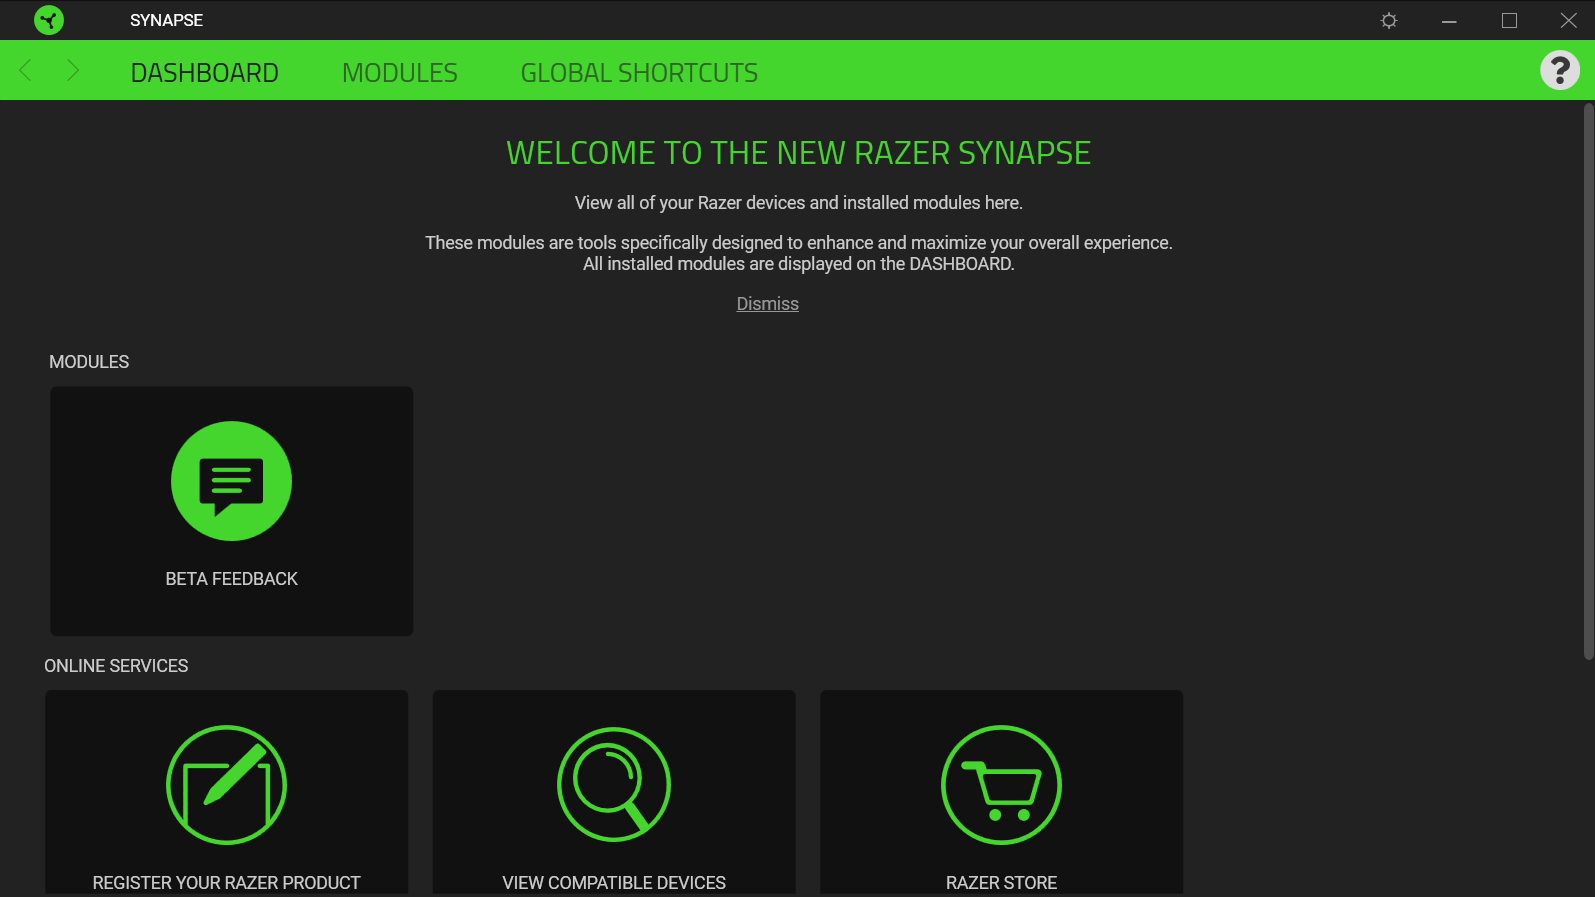 download the last version for ipod Razer Synapse 3.20230731 / 2.21.24.41